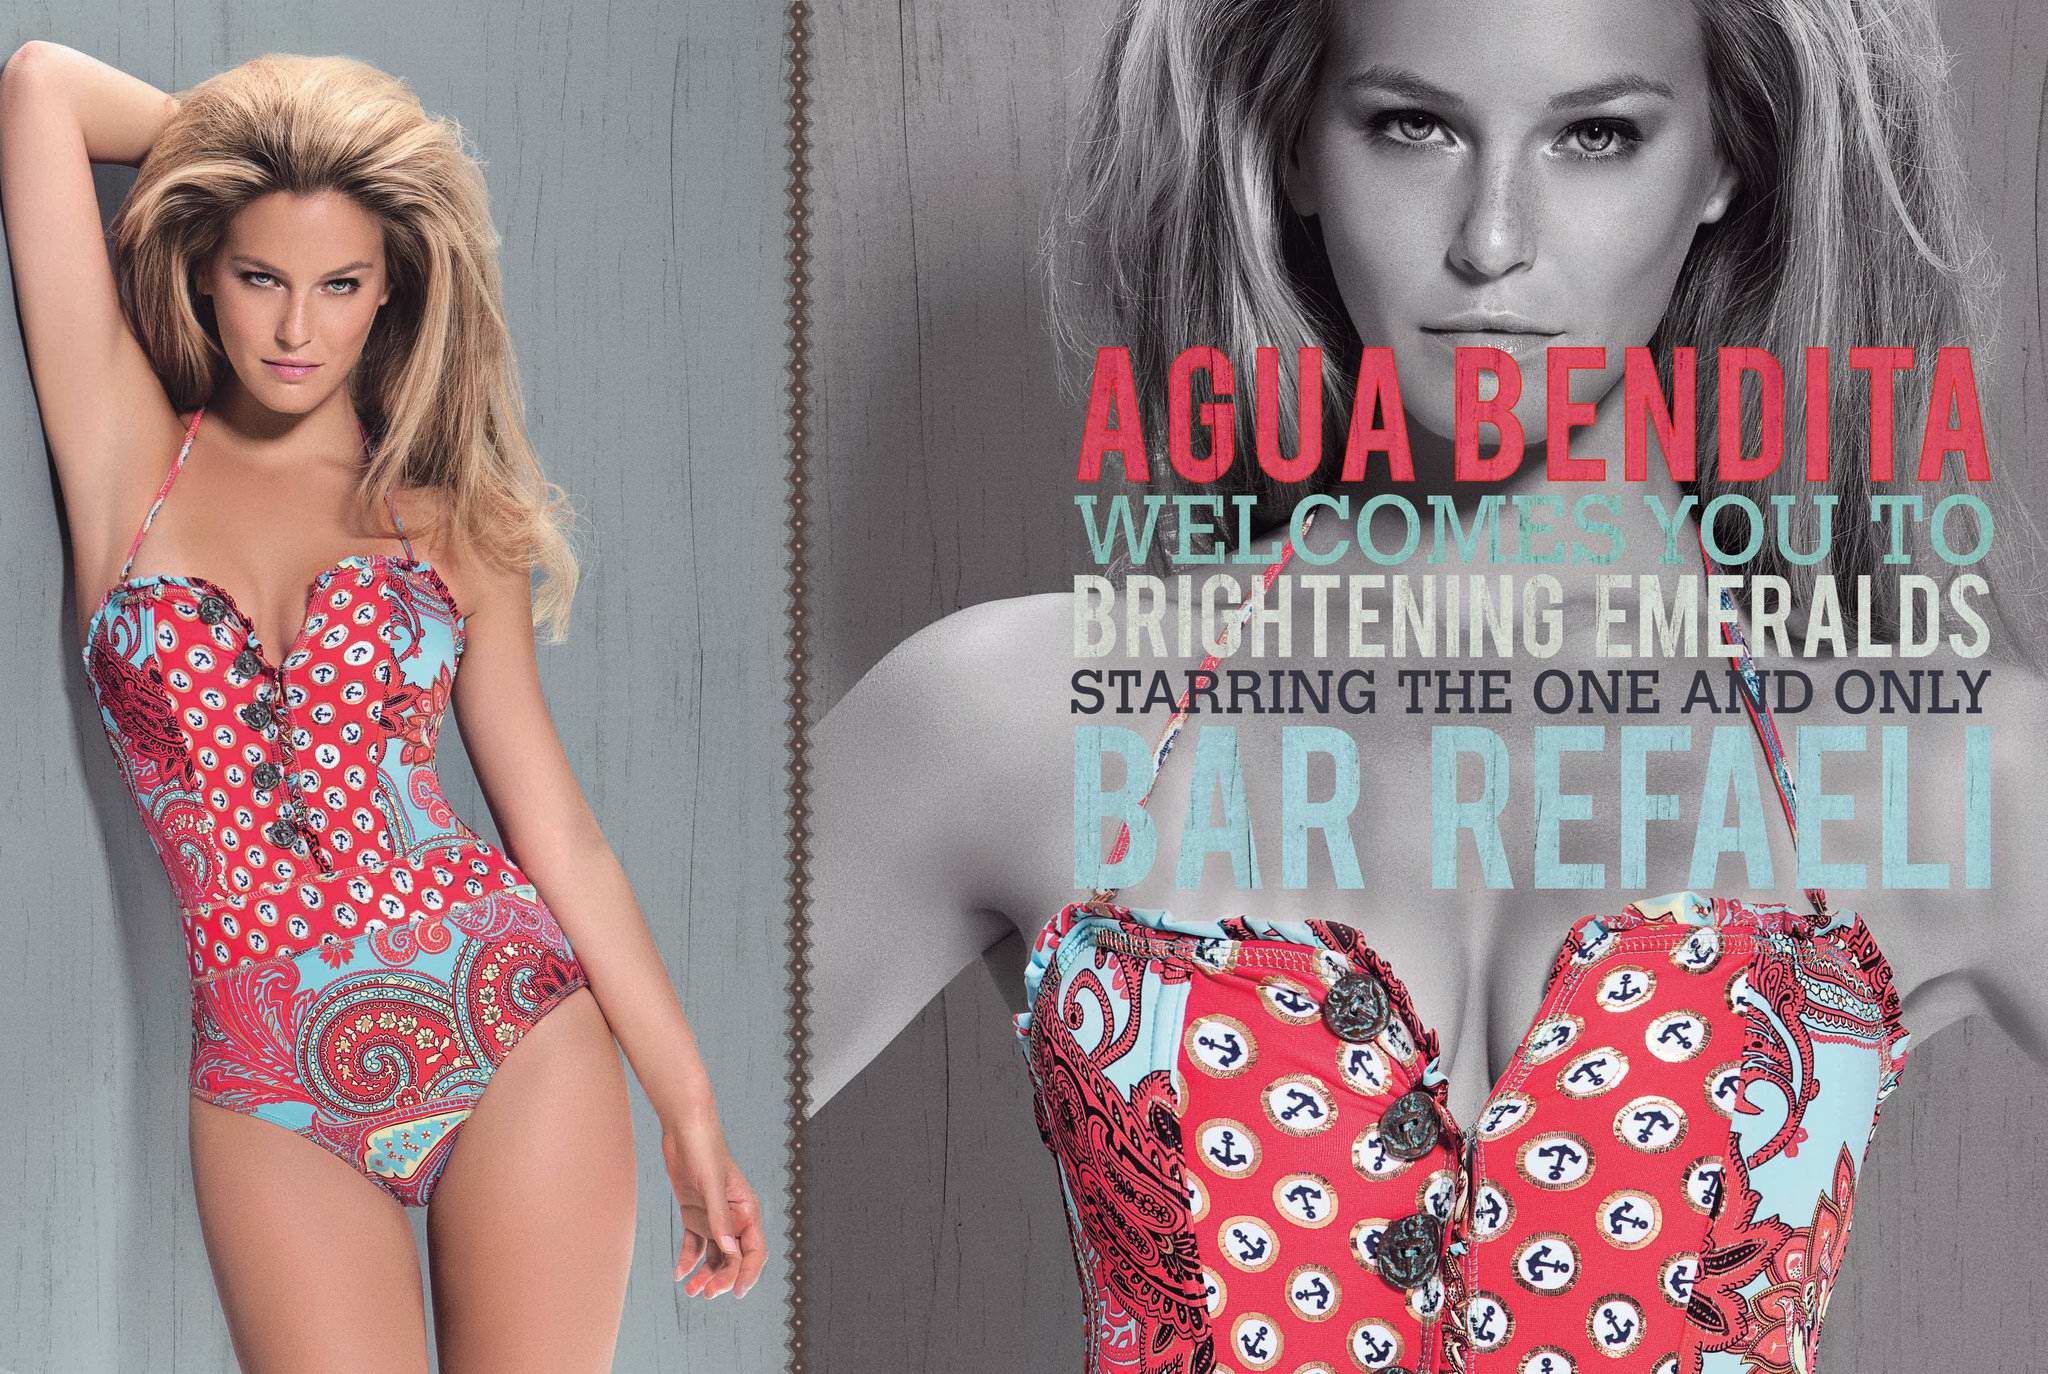 Bar Refaeli posing in bikinis for Aqua Bendita 2012 promo campaign #75292586